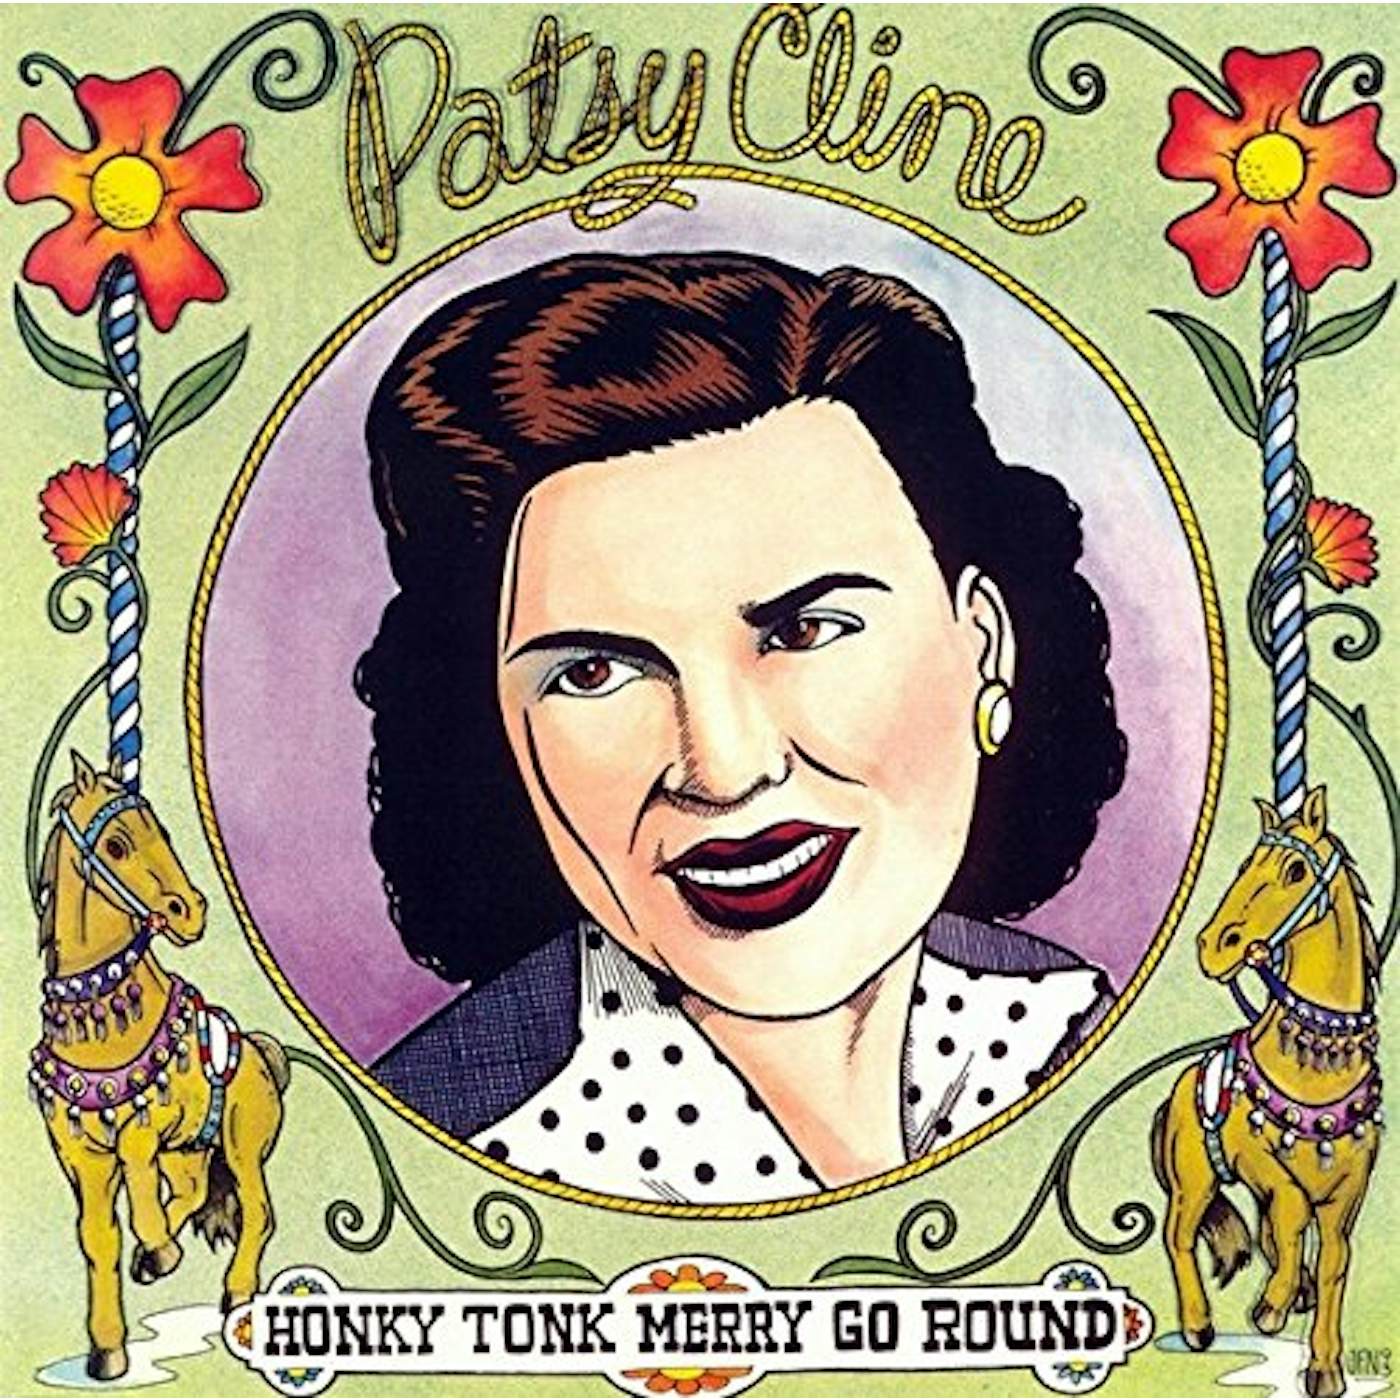 Patsy/Centuries O'Hara SPLIT Vinyl Record